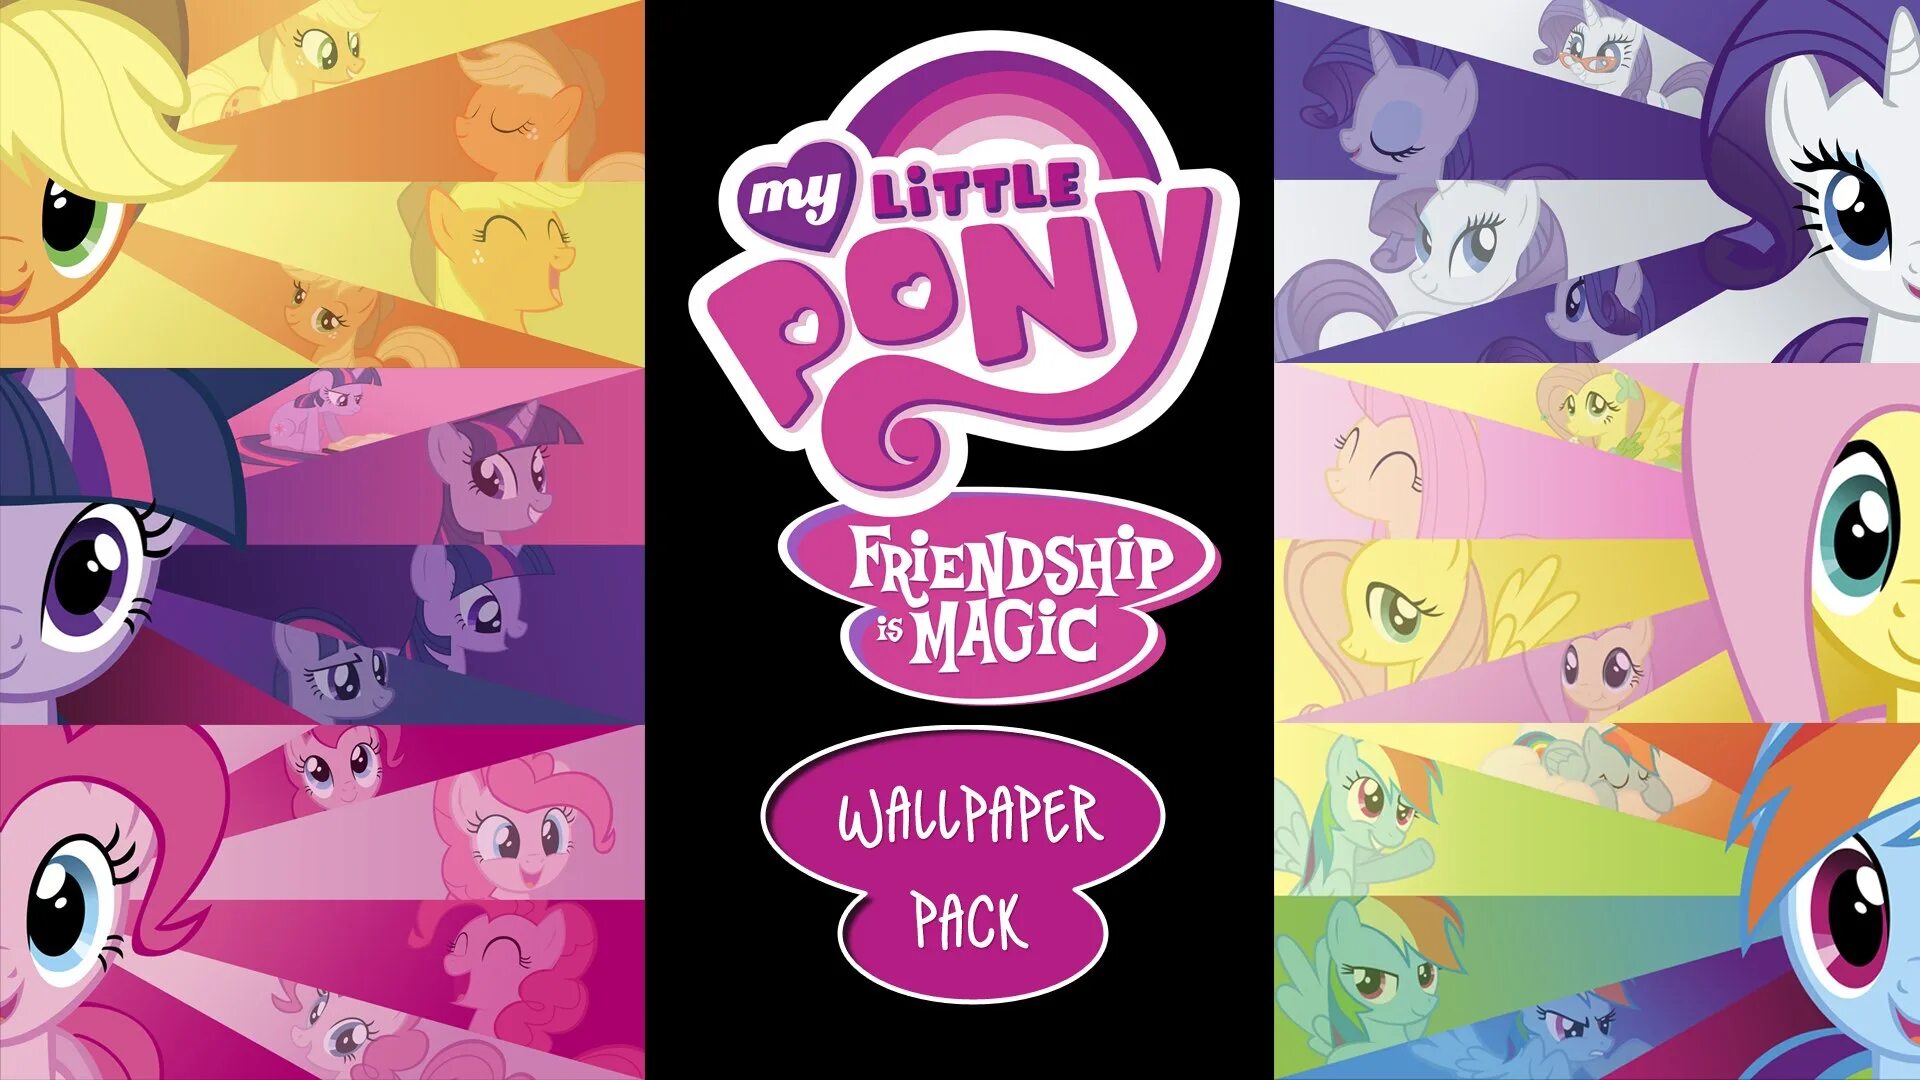 My little pony обновление. My little Pony Дружба это чудо. My little Pony Friendship is Magic. Пони френдшип из Мэджик. My little Pony плакат.